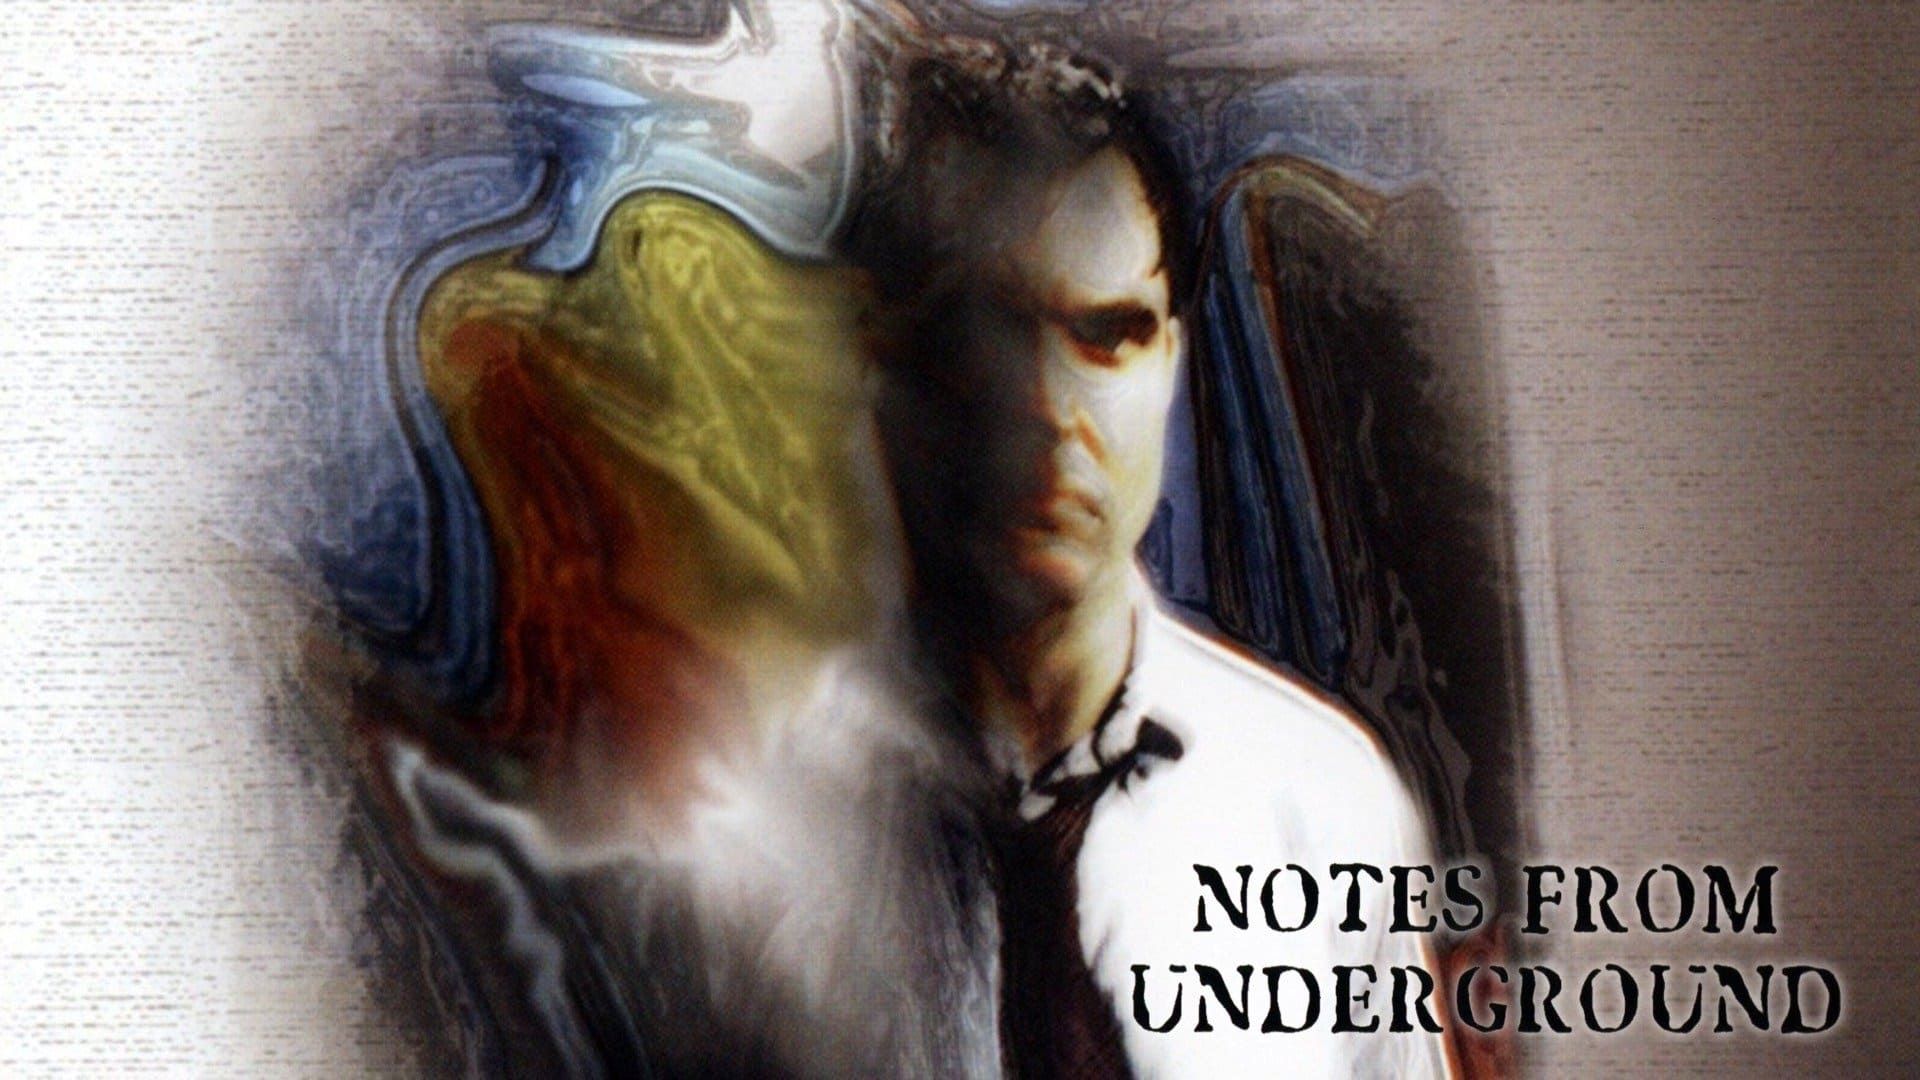 Notes from Underground background